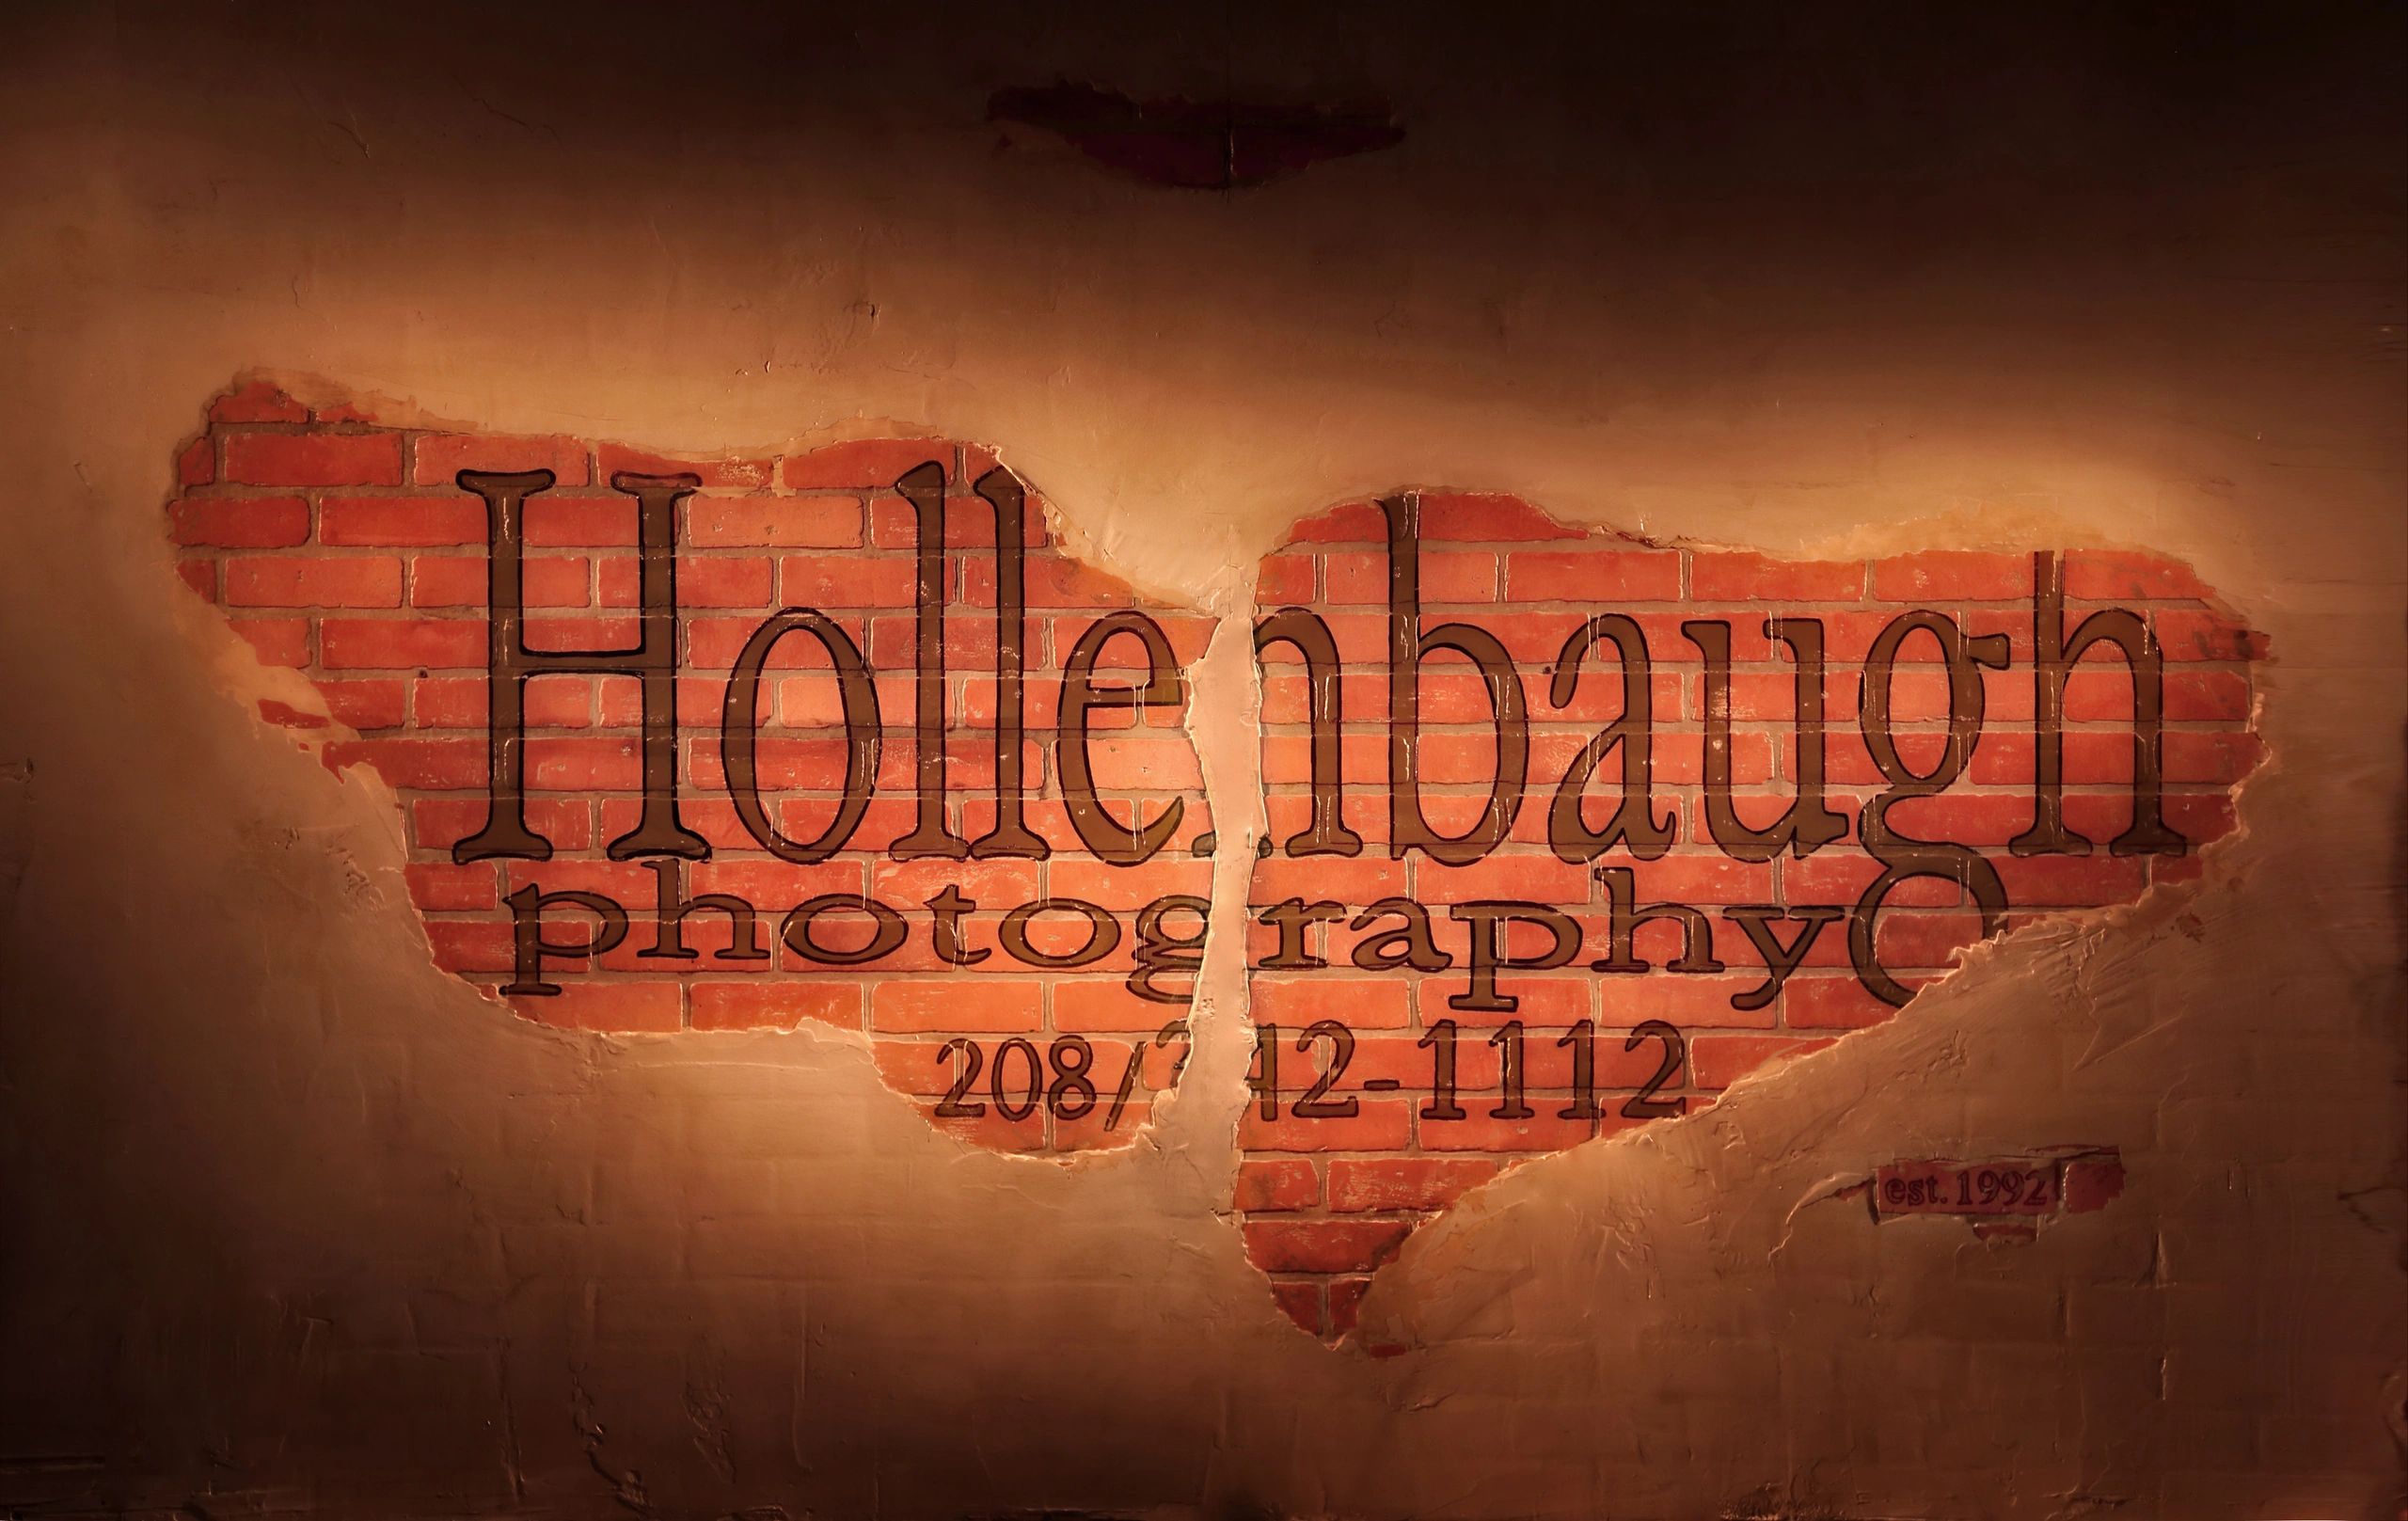 Hollenbaugh Photography